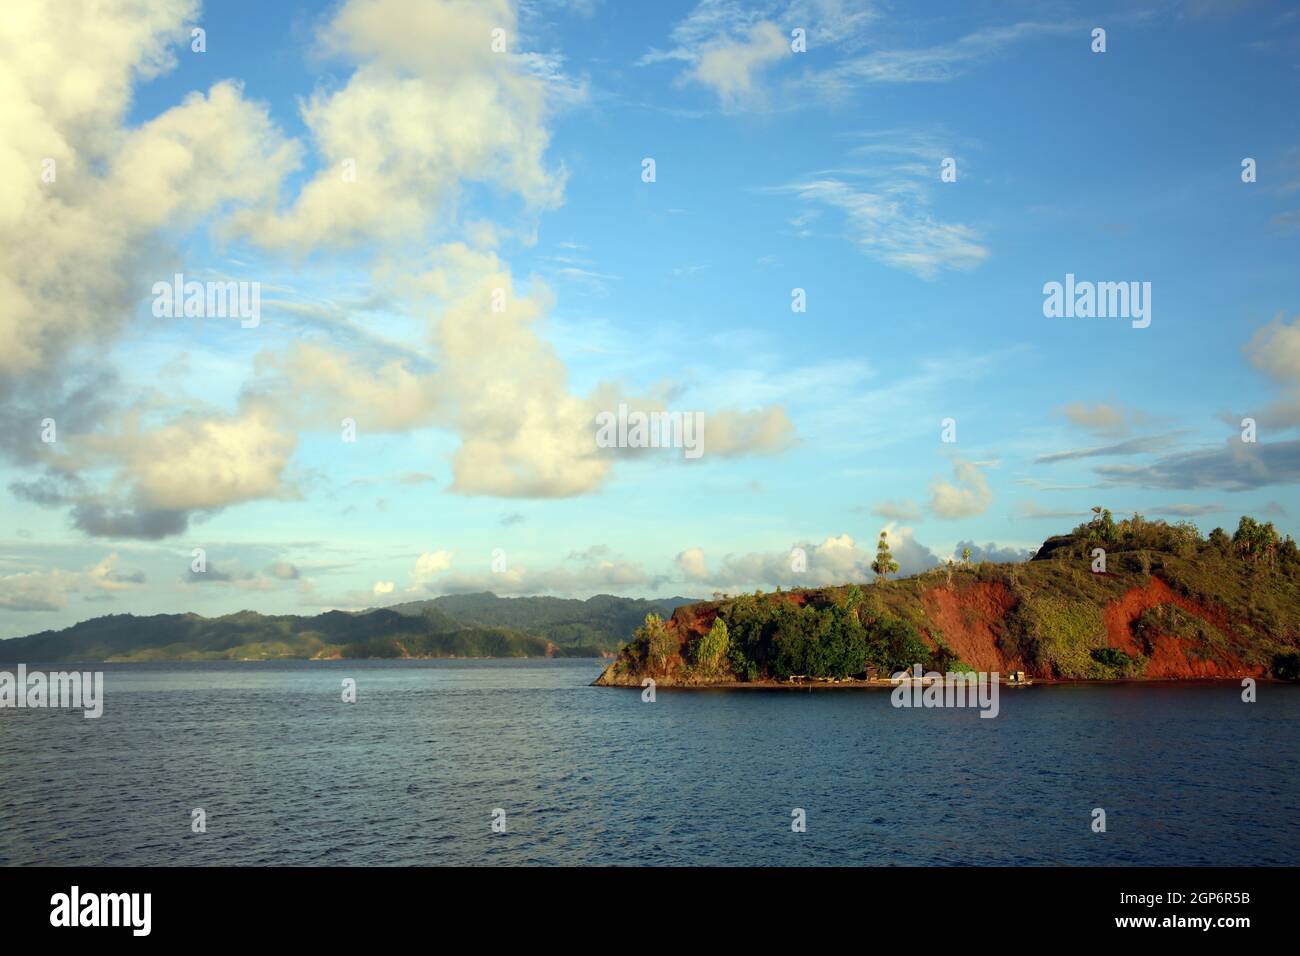 Molukkische Inselwelt um die Insel Muari, Nord-Molukken, Halmahera, Indonesien Stock Photo